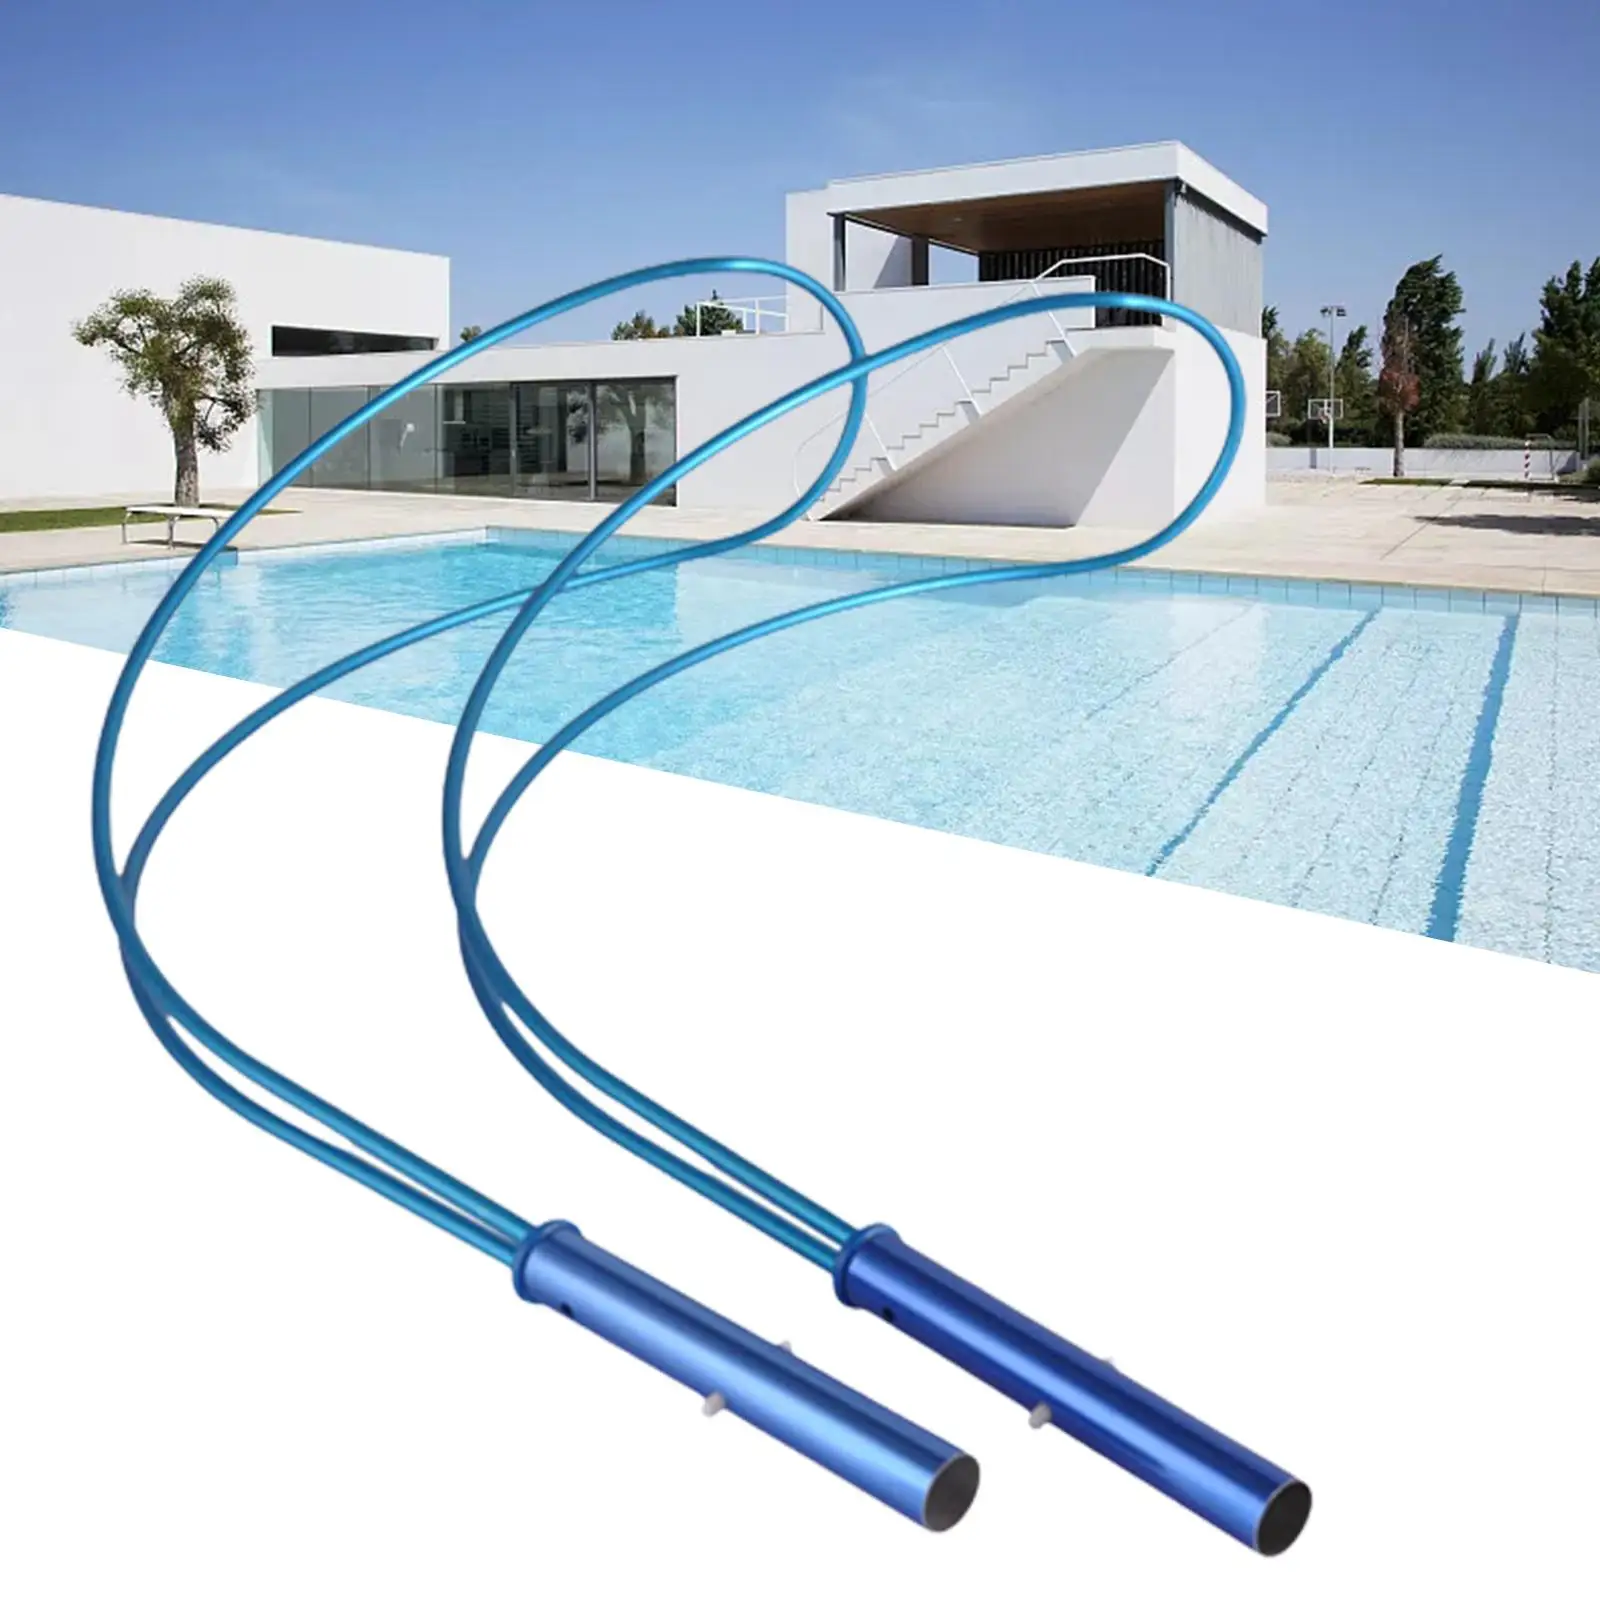 2Pcs Swimming Pool Safety Hook Multifunction Aluminum life hooks Emergency Life Saving Equipment for Swimmers Help Struggling